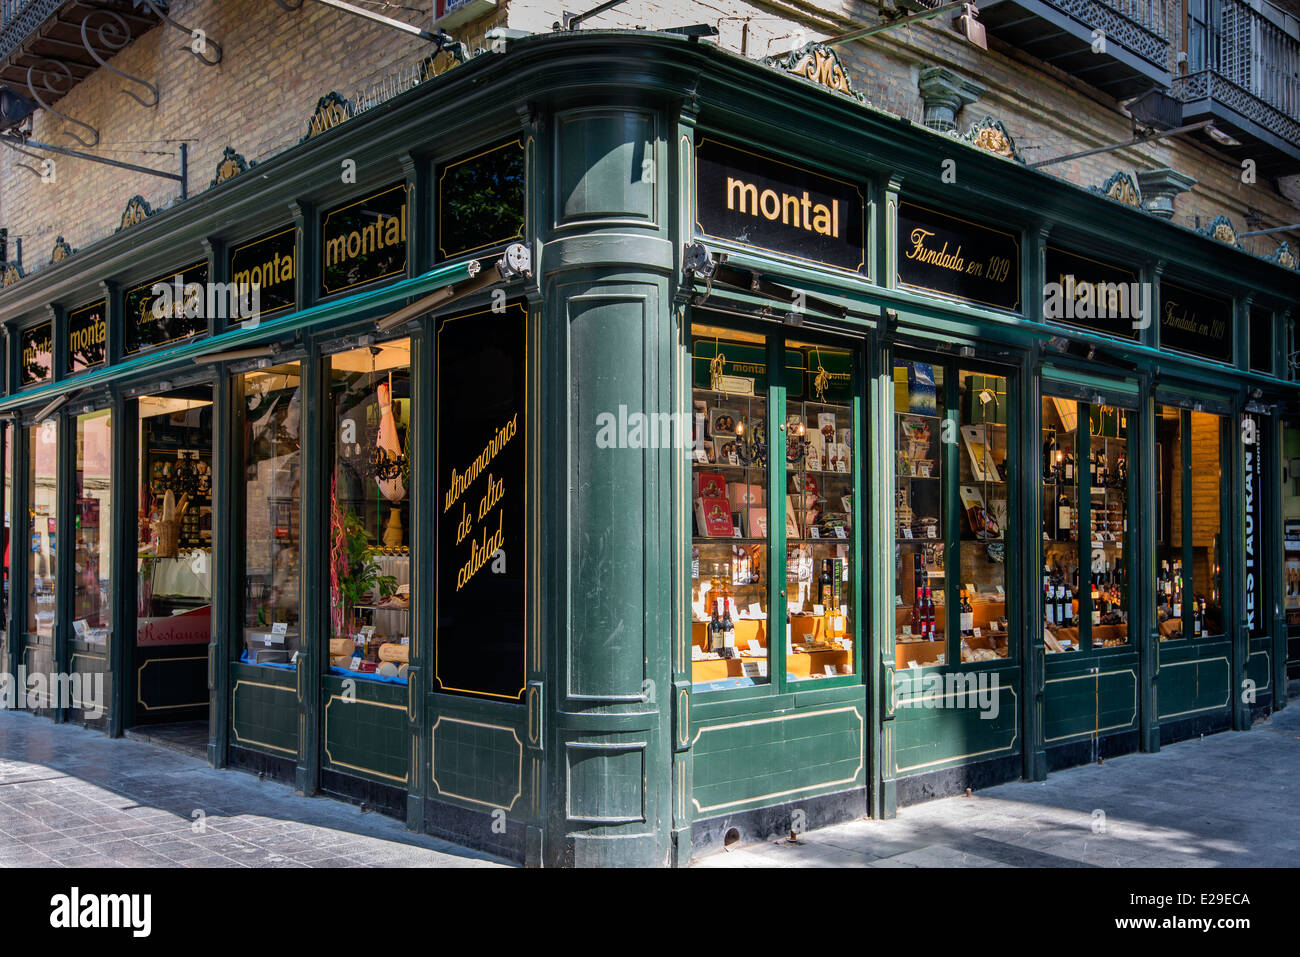 Montal gourmet shop and restaurant, Zaragoza, Aragon, Spain Stock Photo